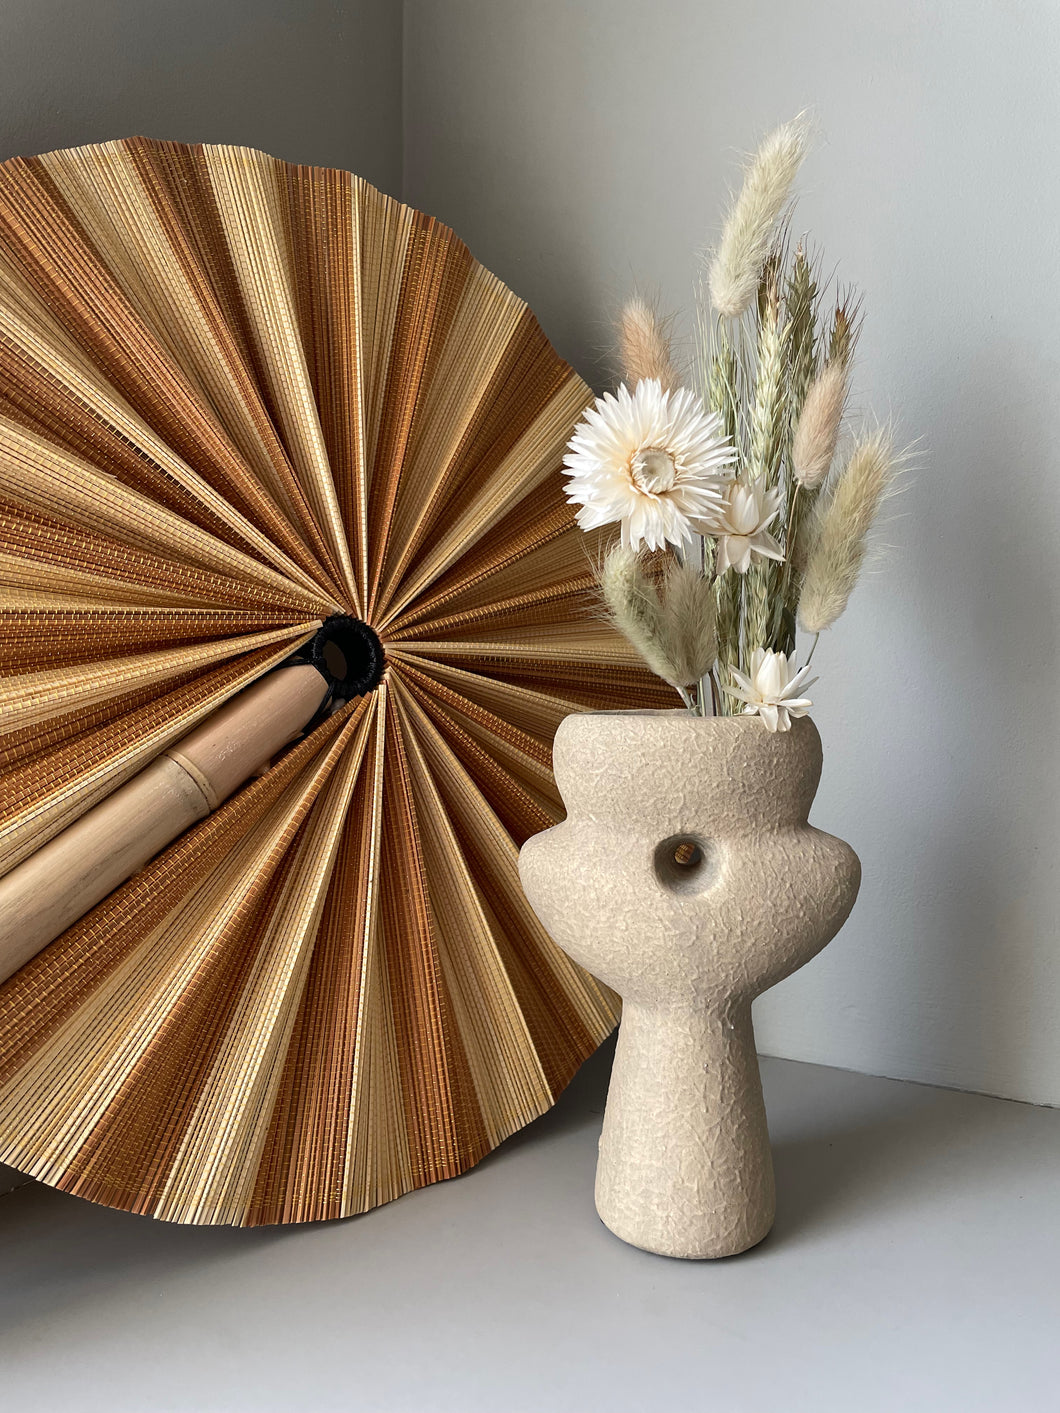 Ngoie Terracotta Mini Vase